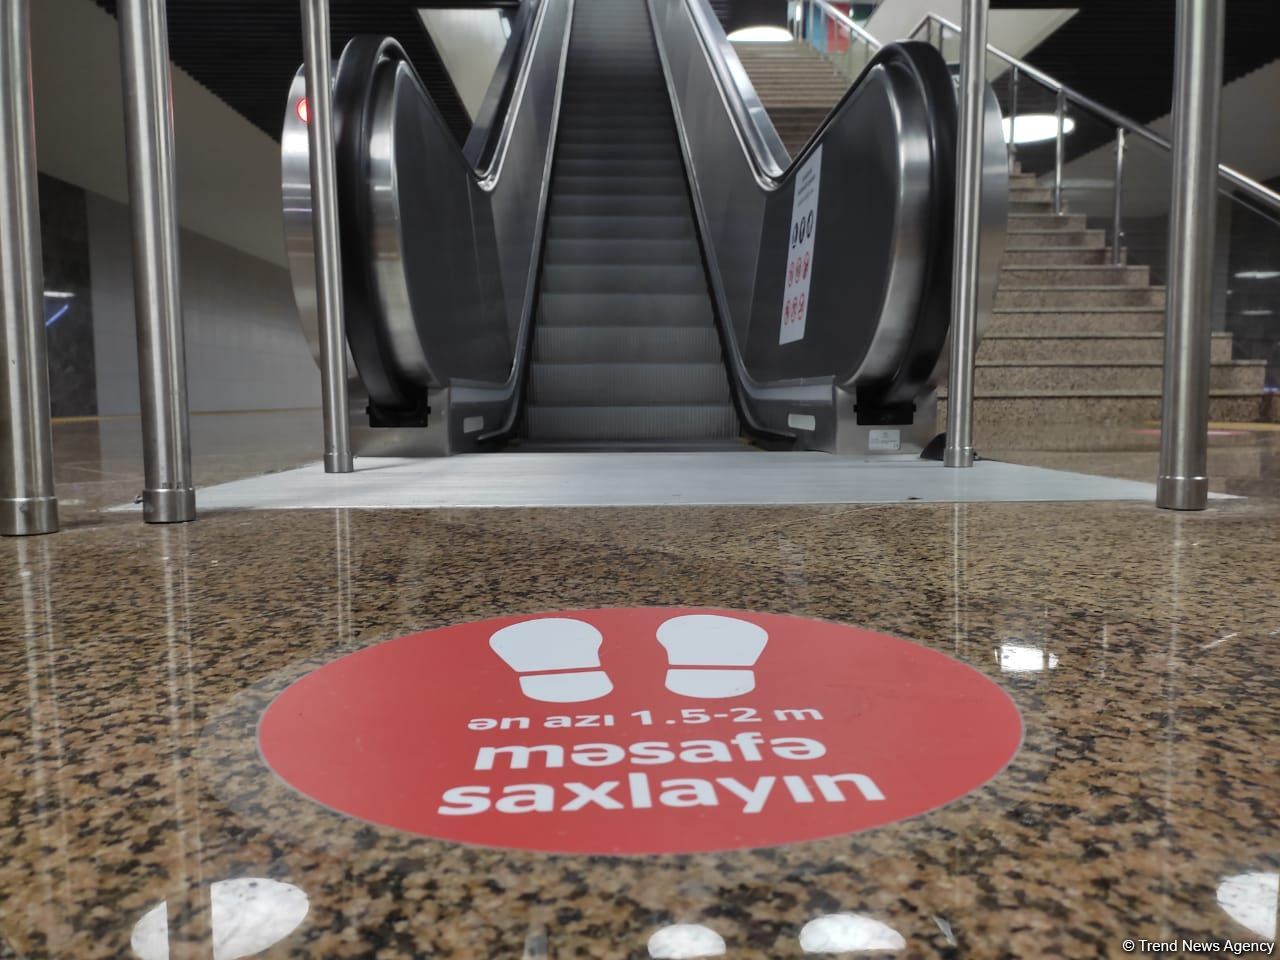 Baku Metro sets up continuous power supply for ‘November 8’ new metro station (PHOTO)